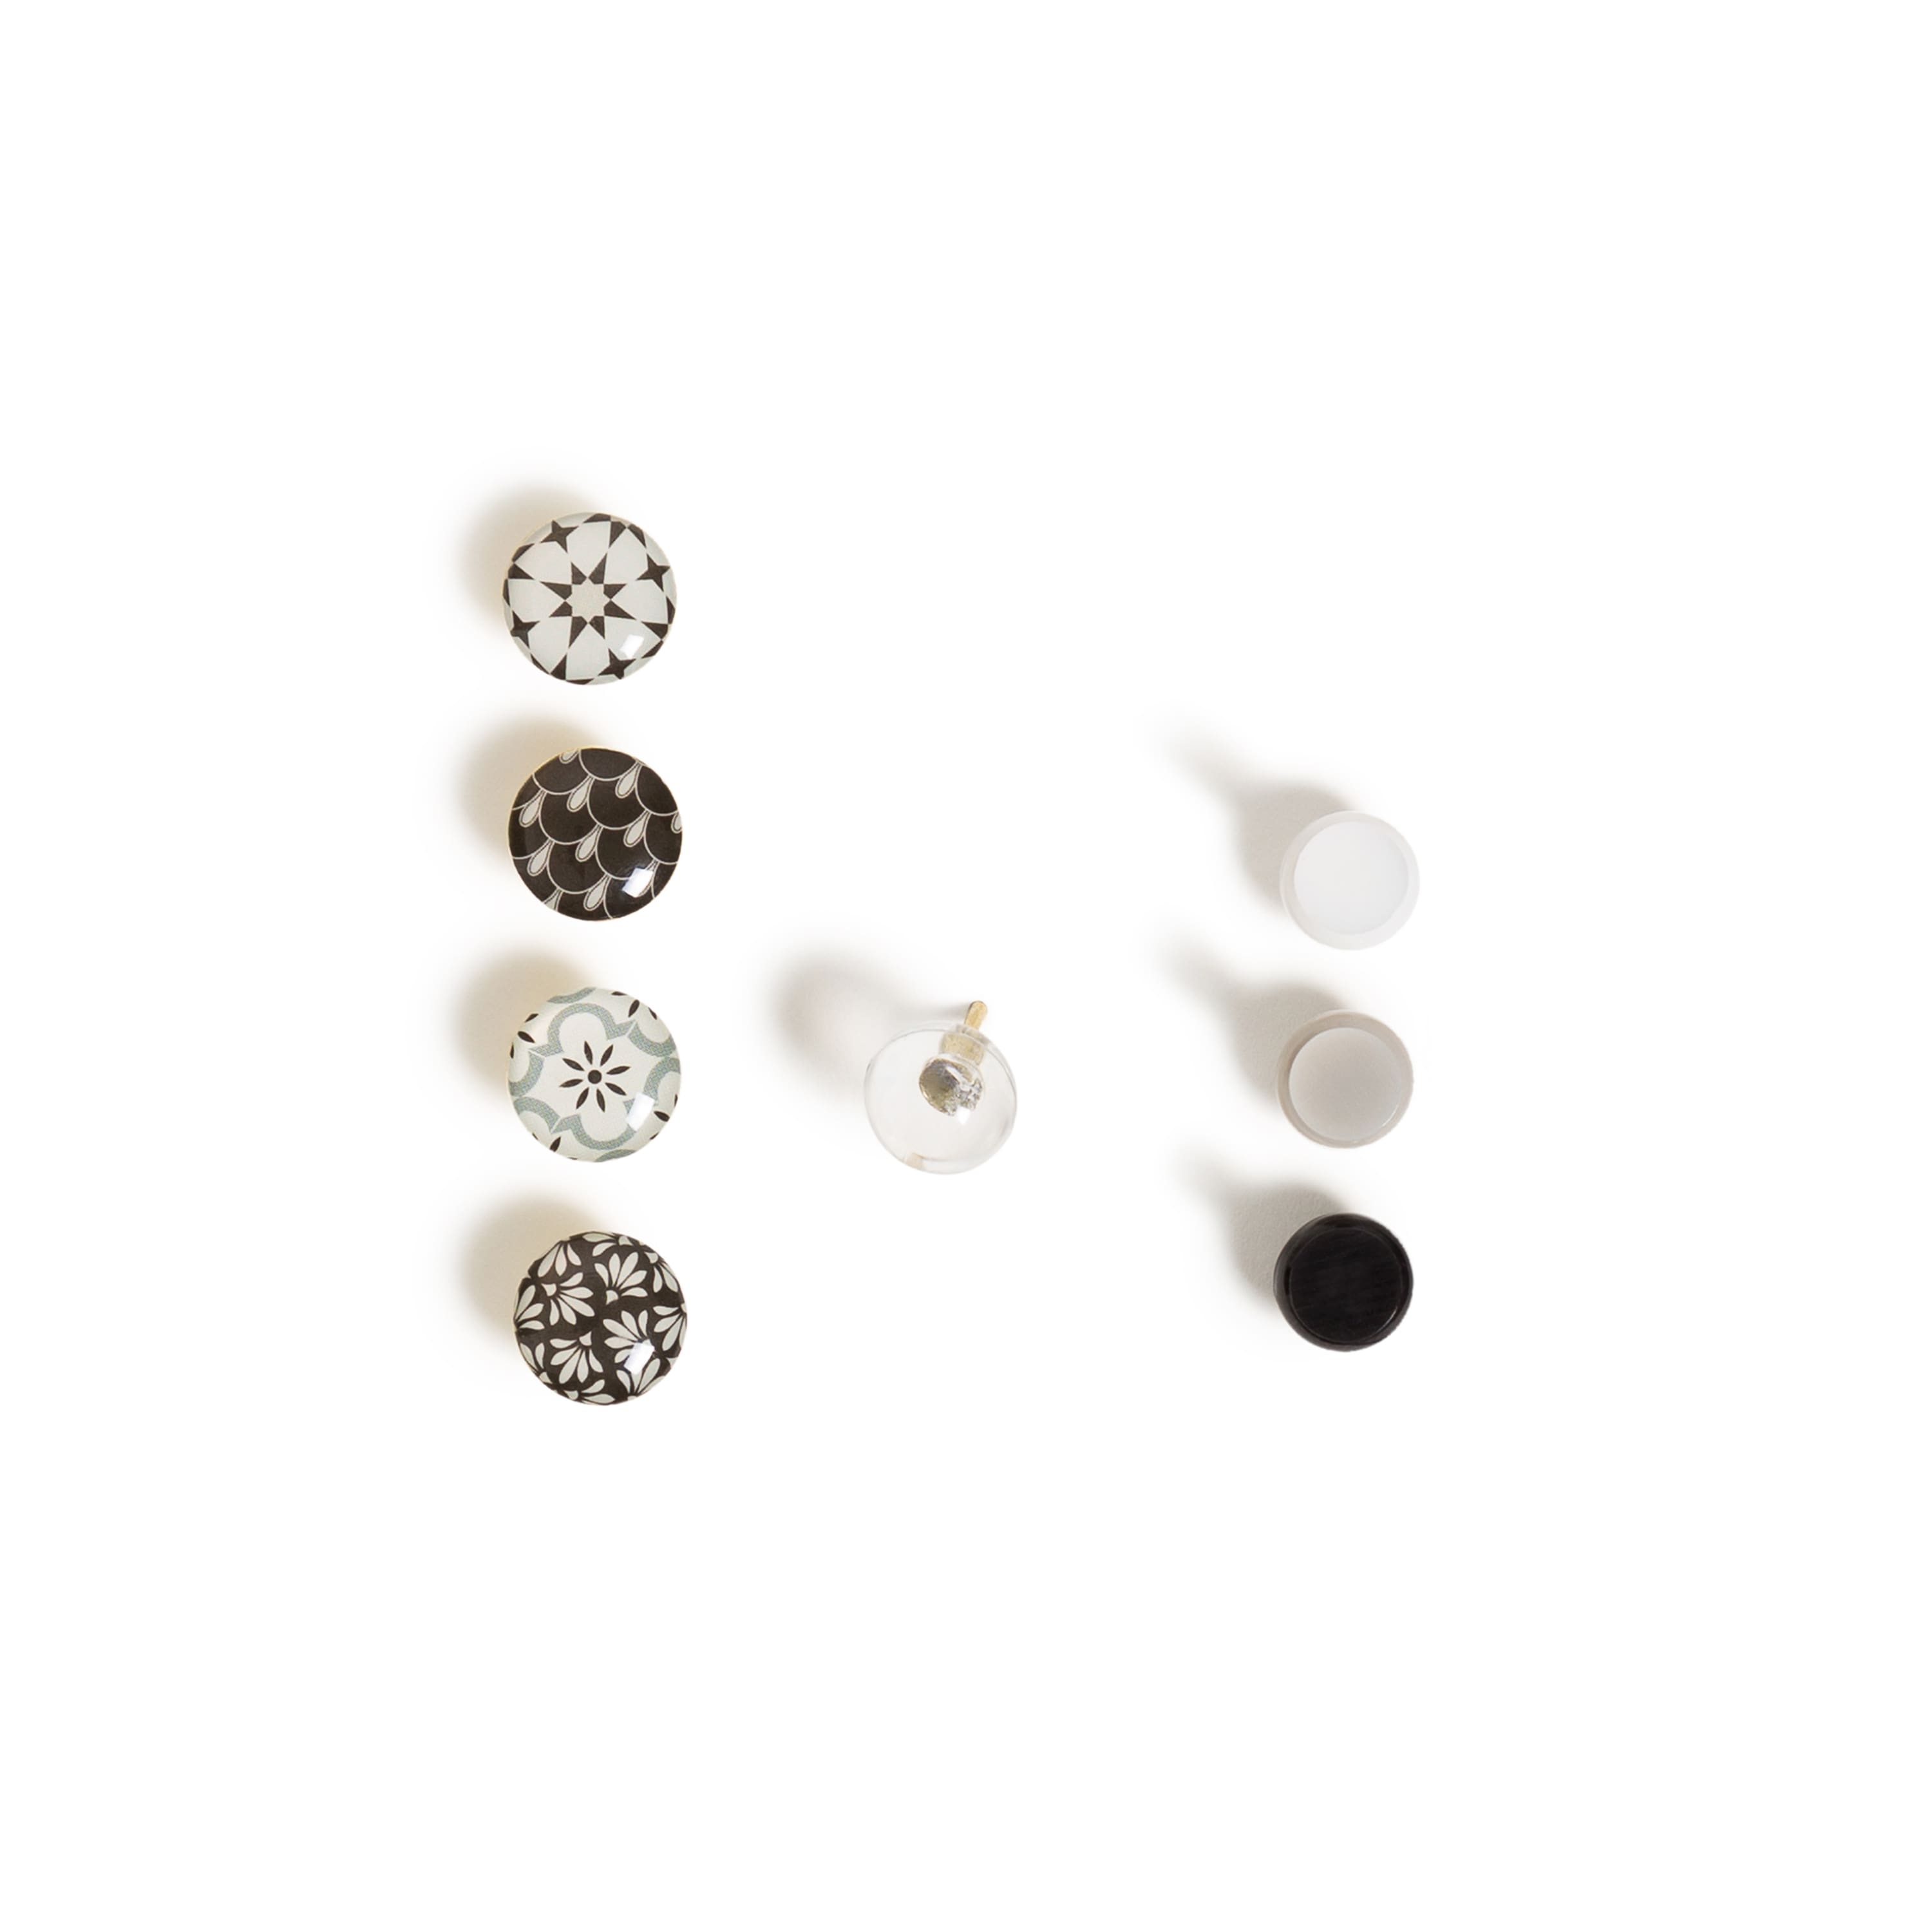 U Brands® Black & White Push Pin Kit